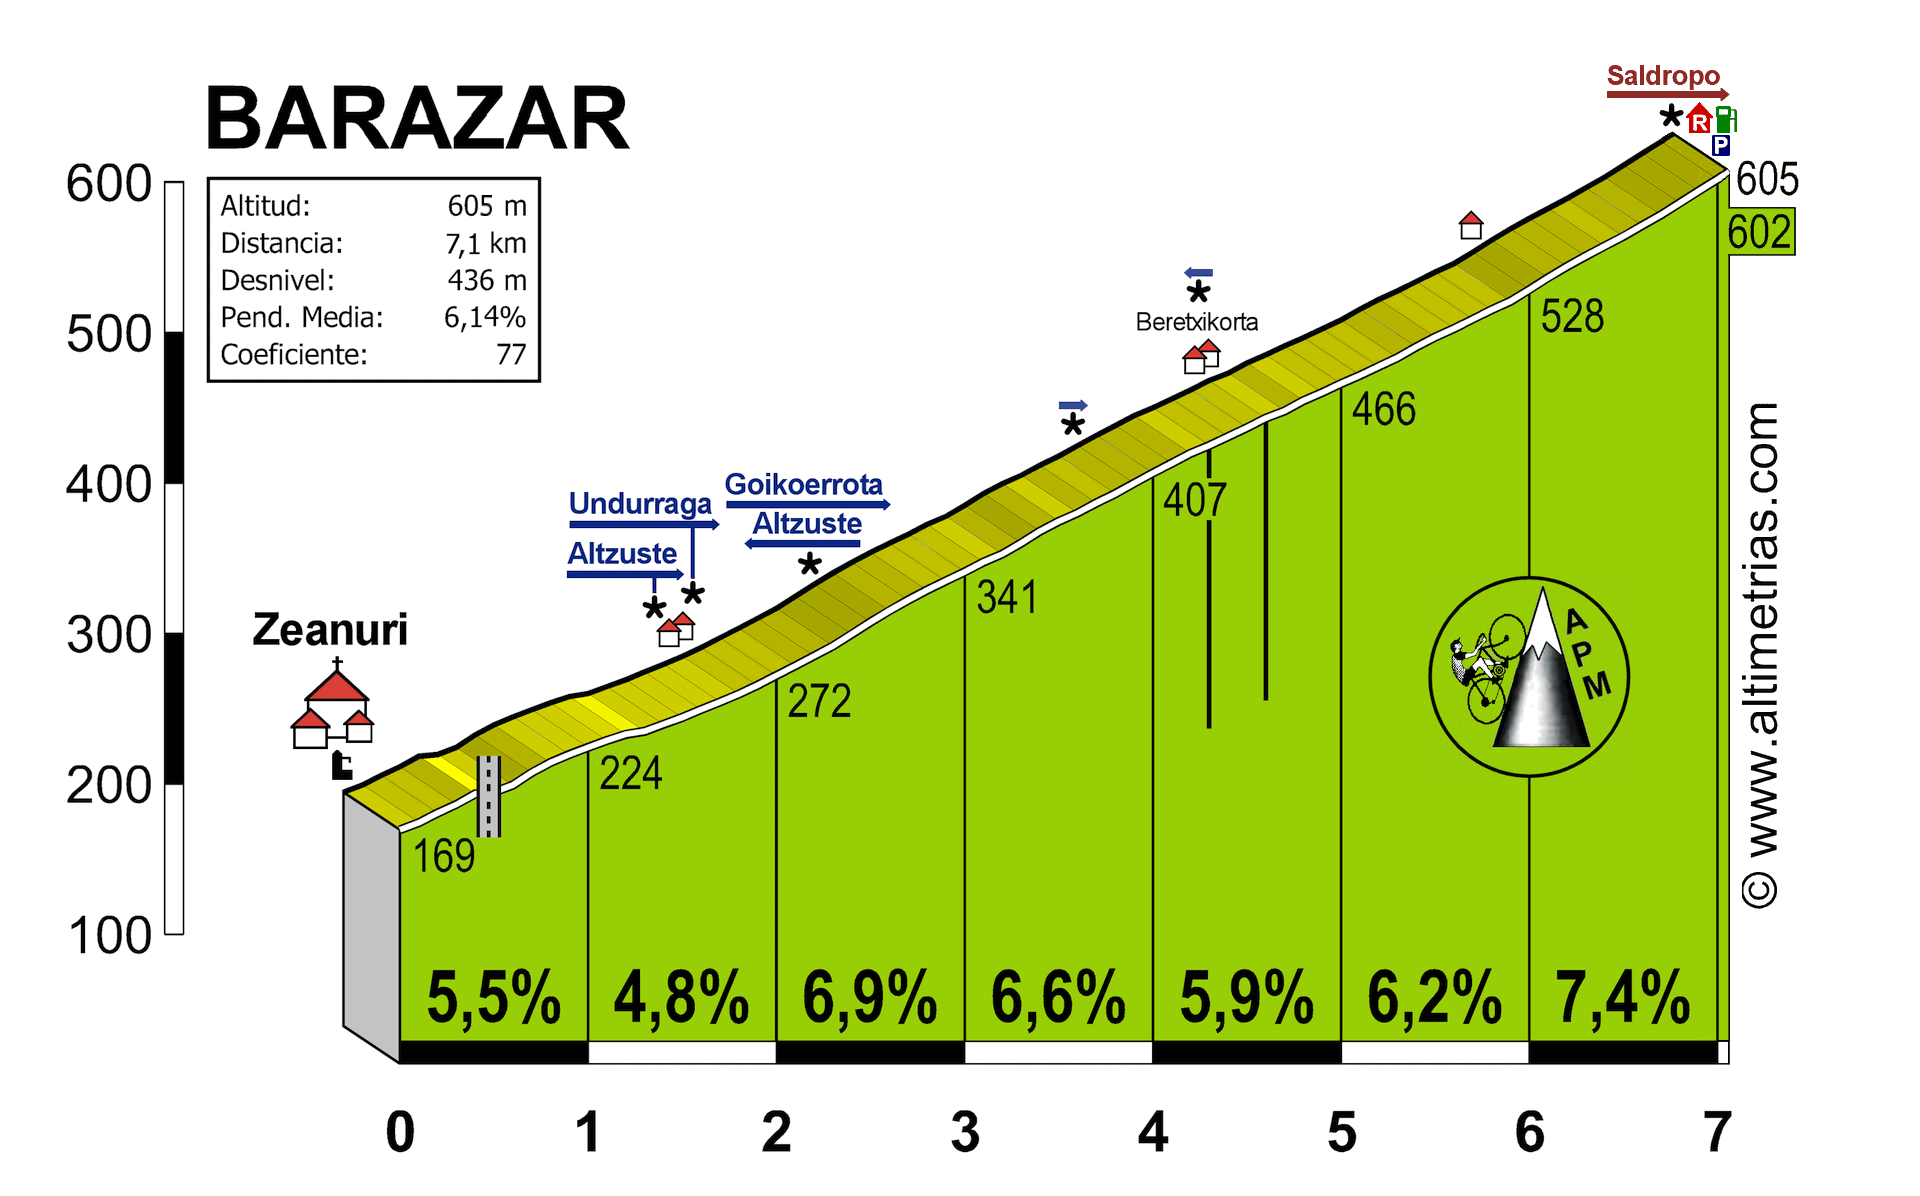 Barazar